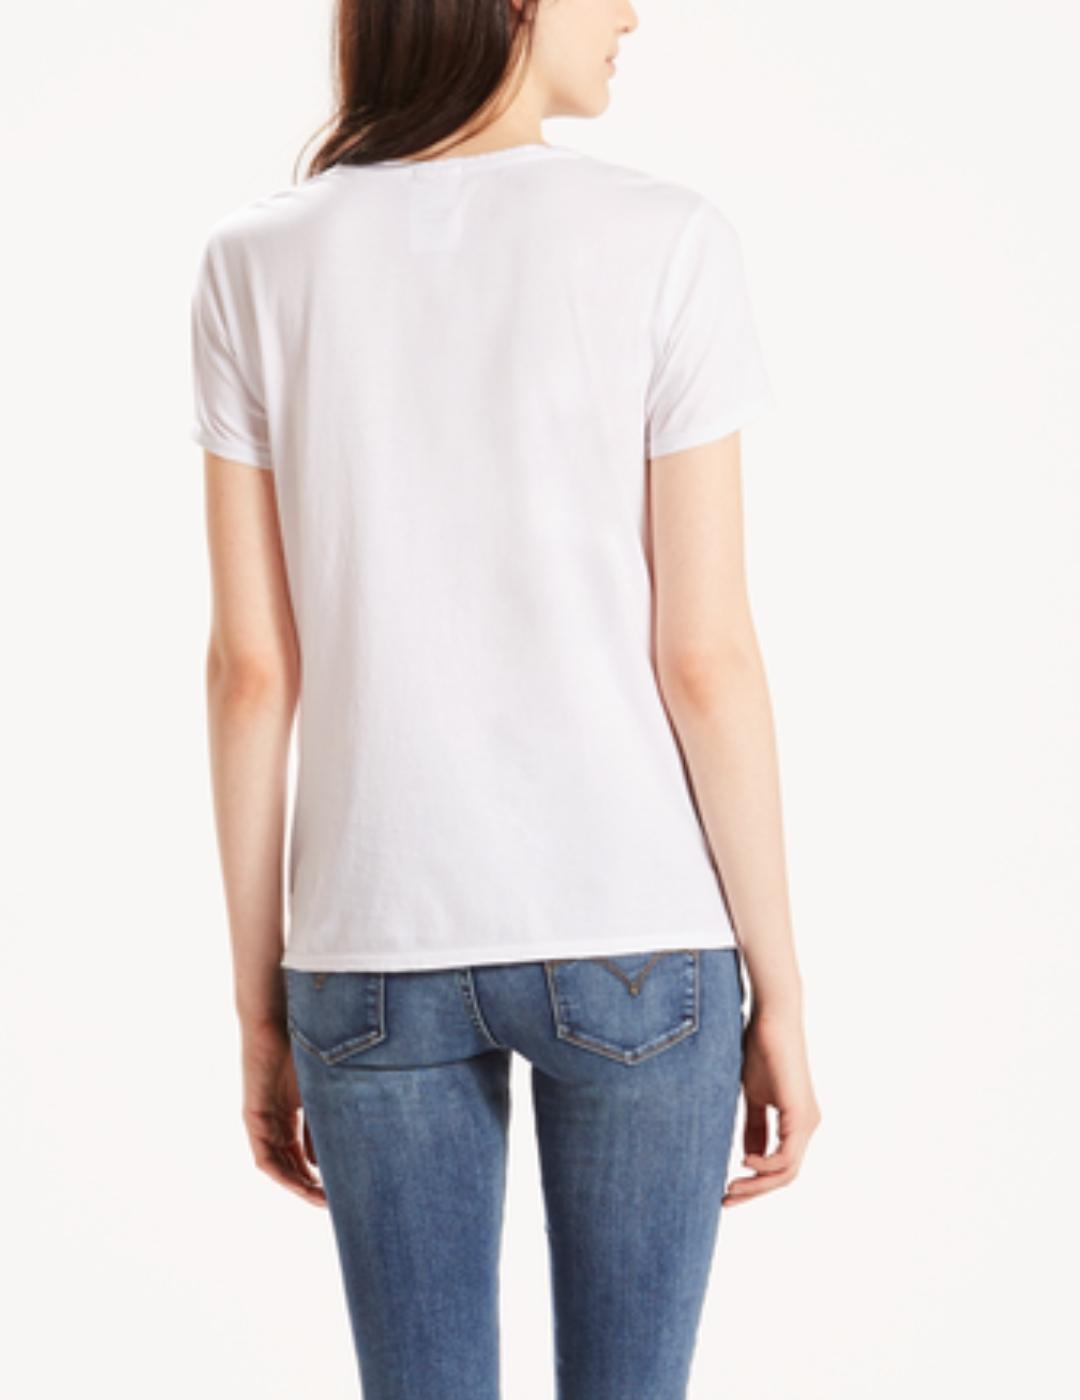 Camiseta levis logo blanca manga corta mujer- 